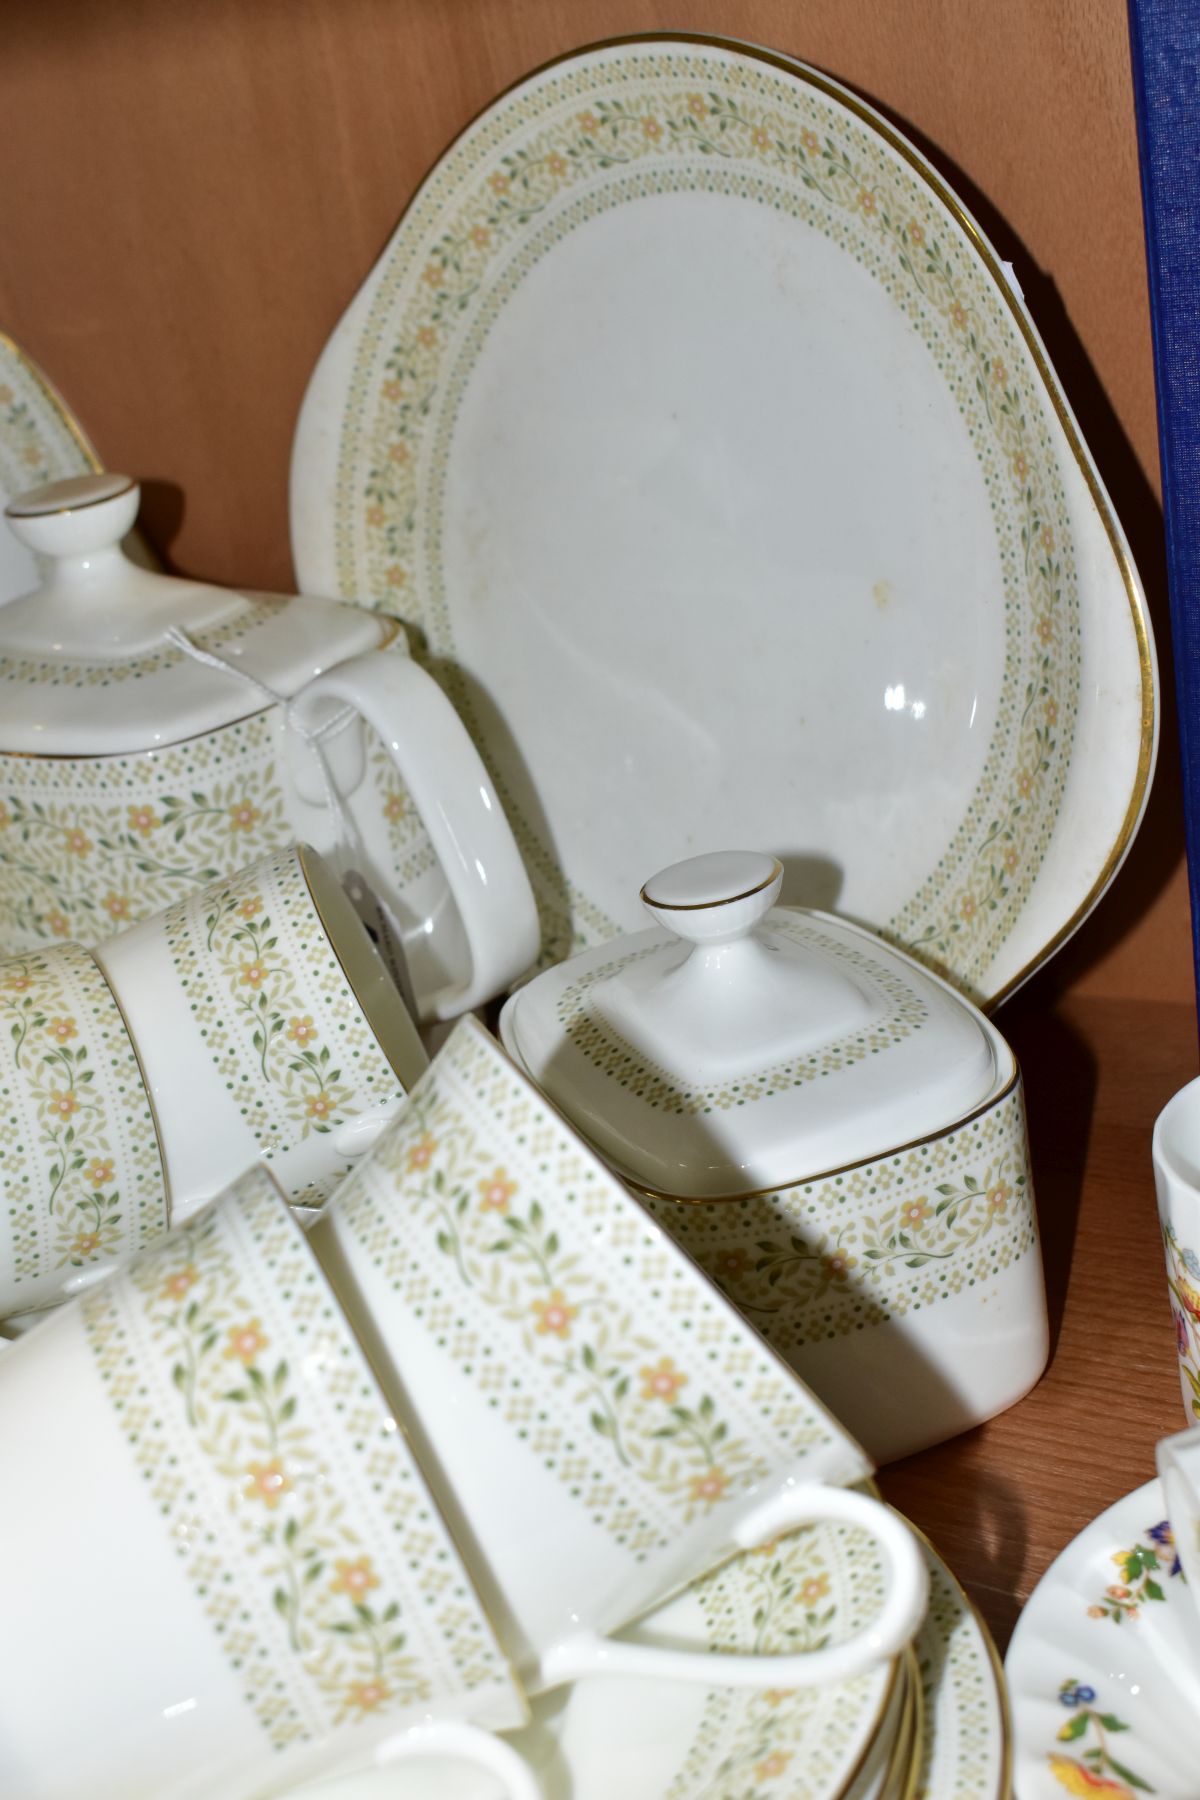 ROYAL DOULTON PAISLEY TEA/COFFEE WARES, comprising teapot, covered sugar bowl, milk/cream jug, two - Image 7 of 8